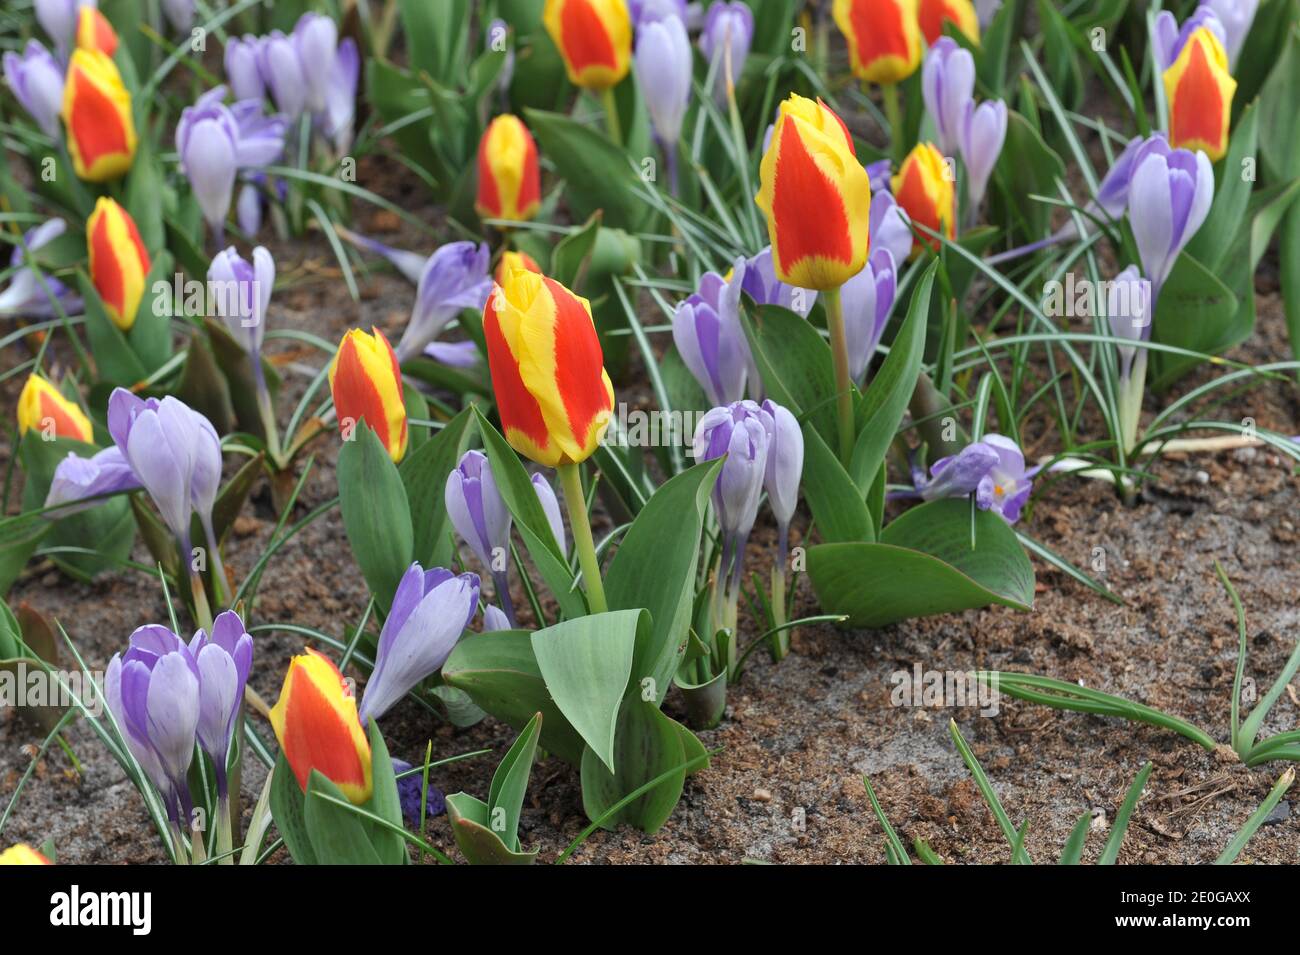 Bulbes de tulipes Kaufmanniana Stresa - GardenStuff